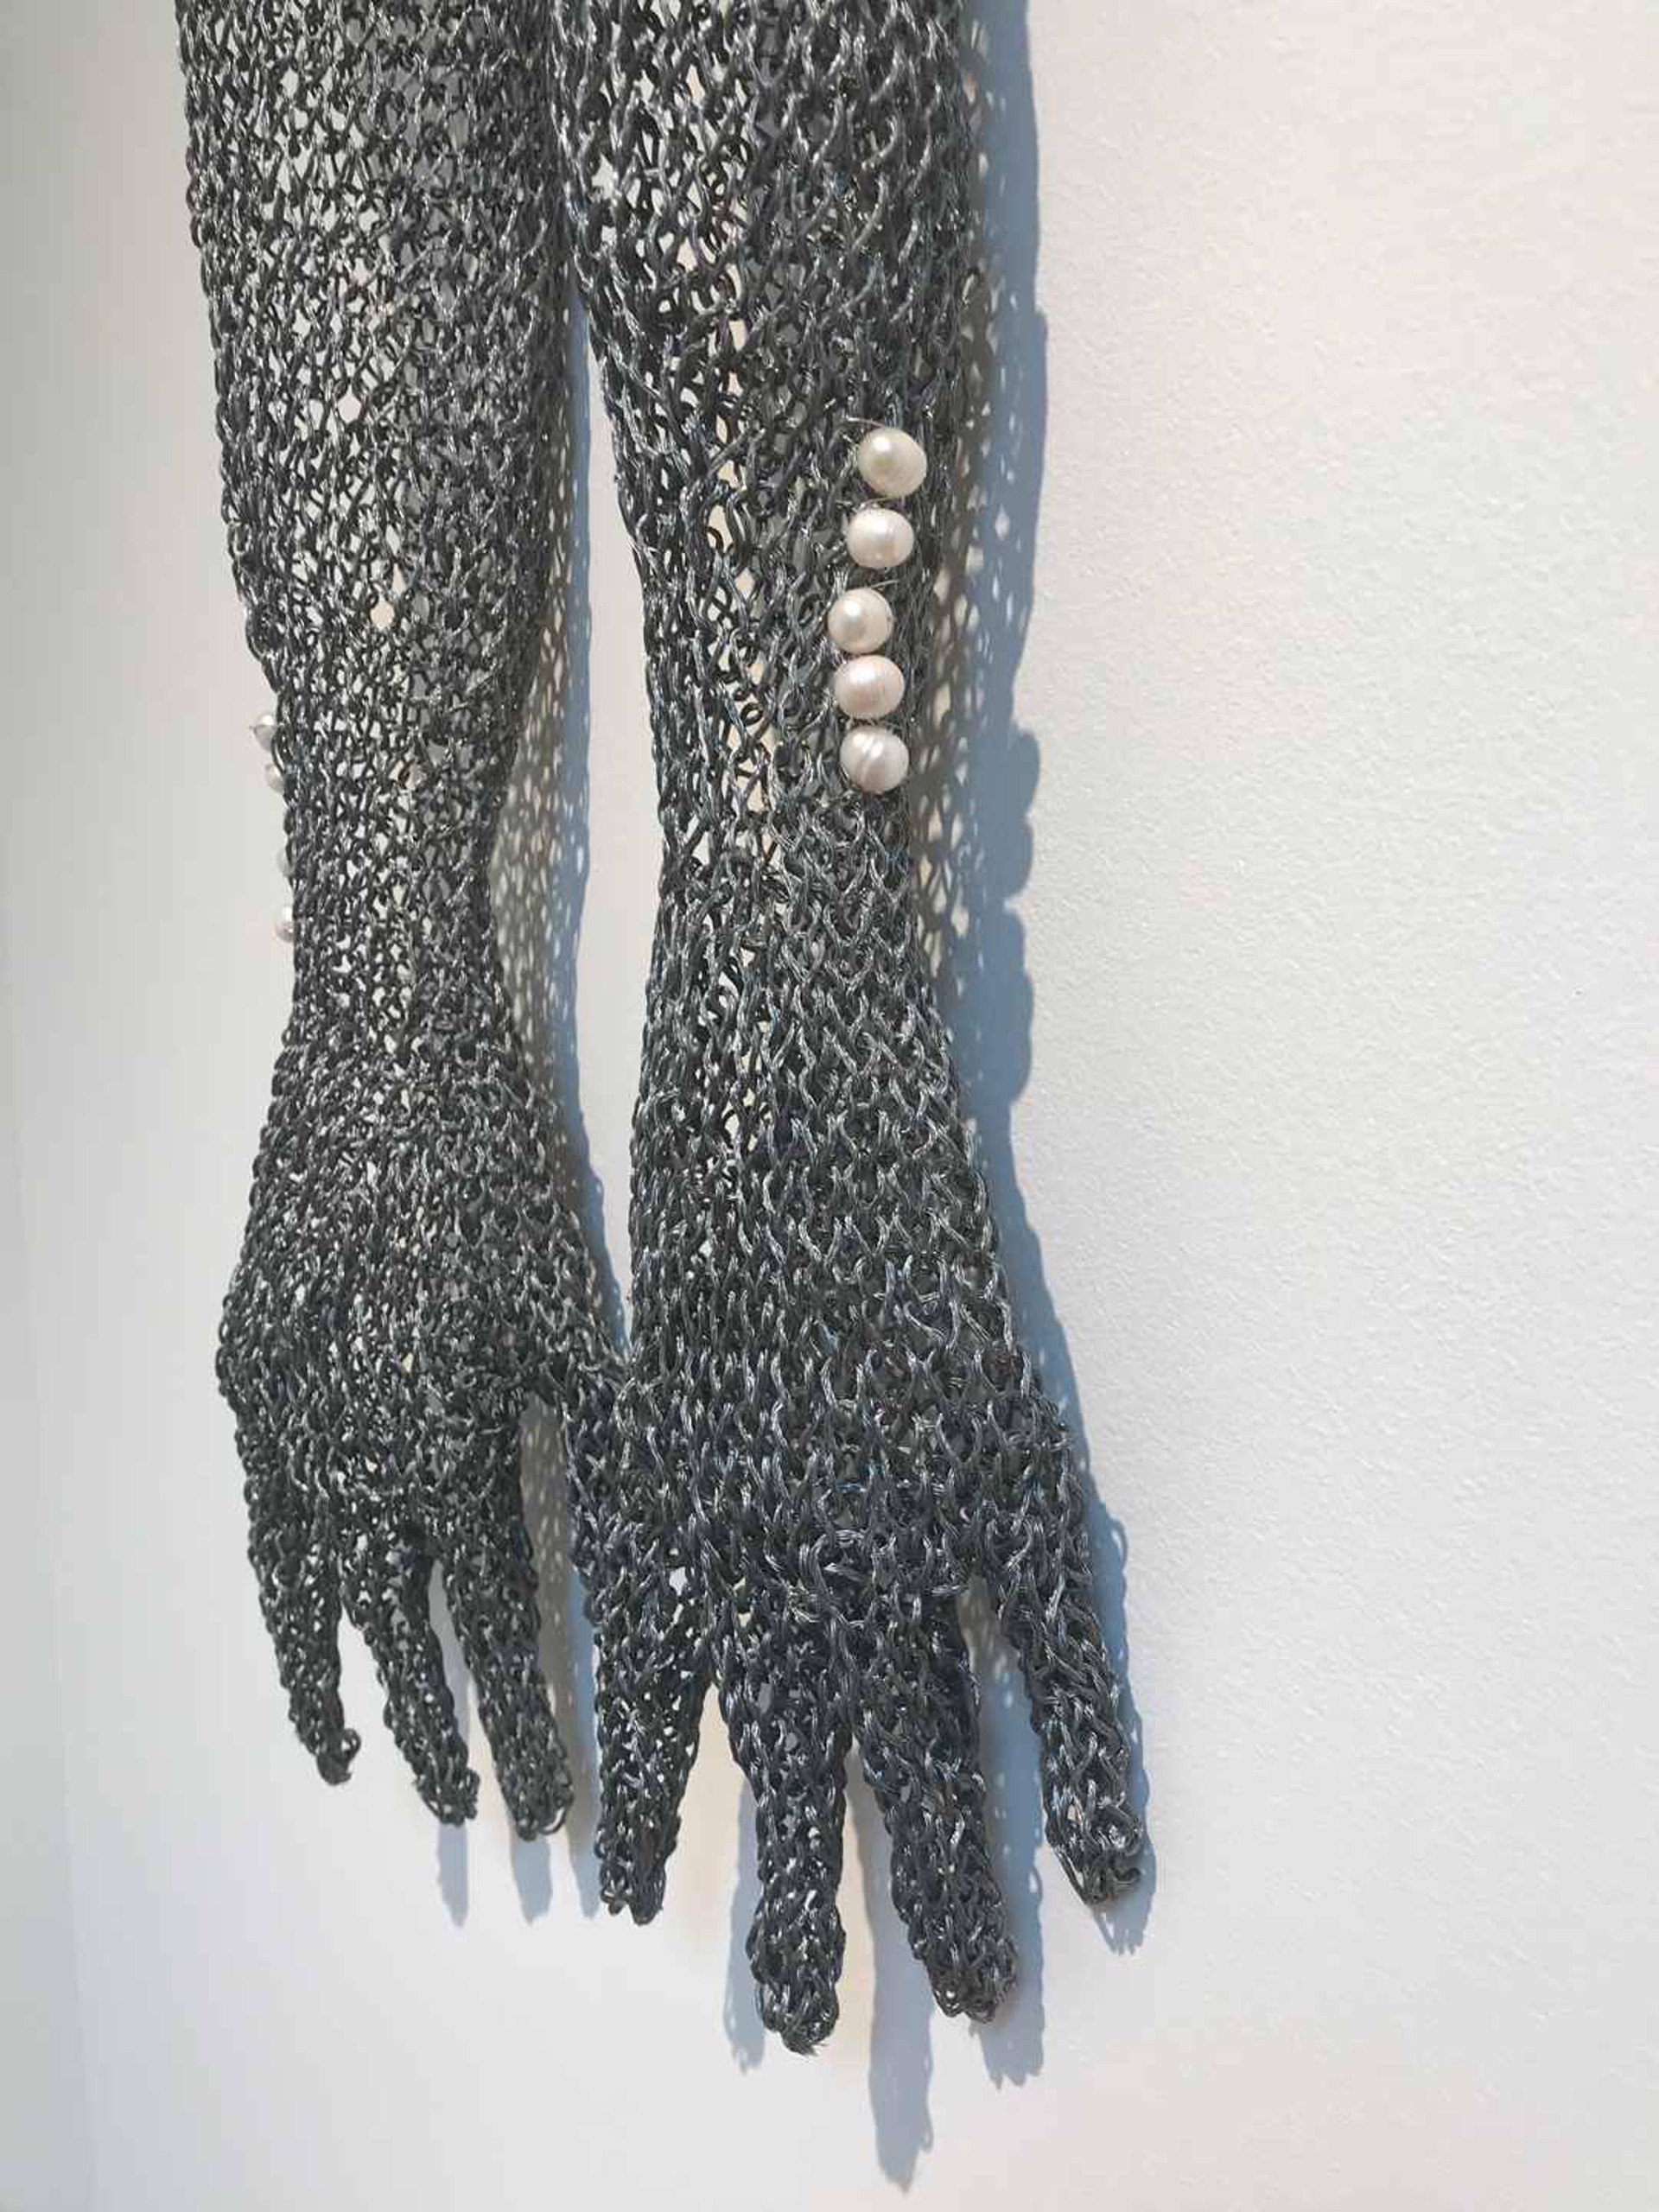 Debutante Gloves by Sarah Mosteller